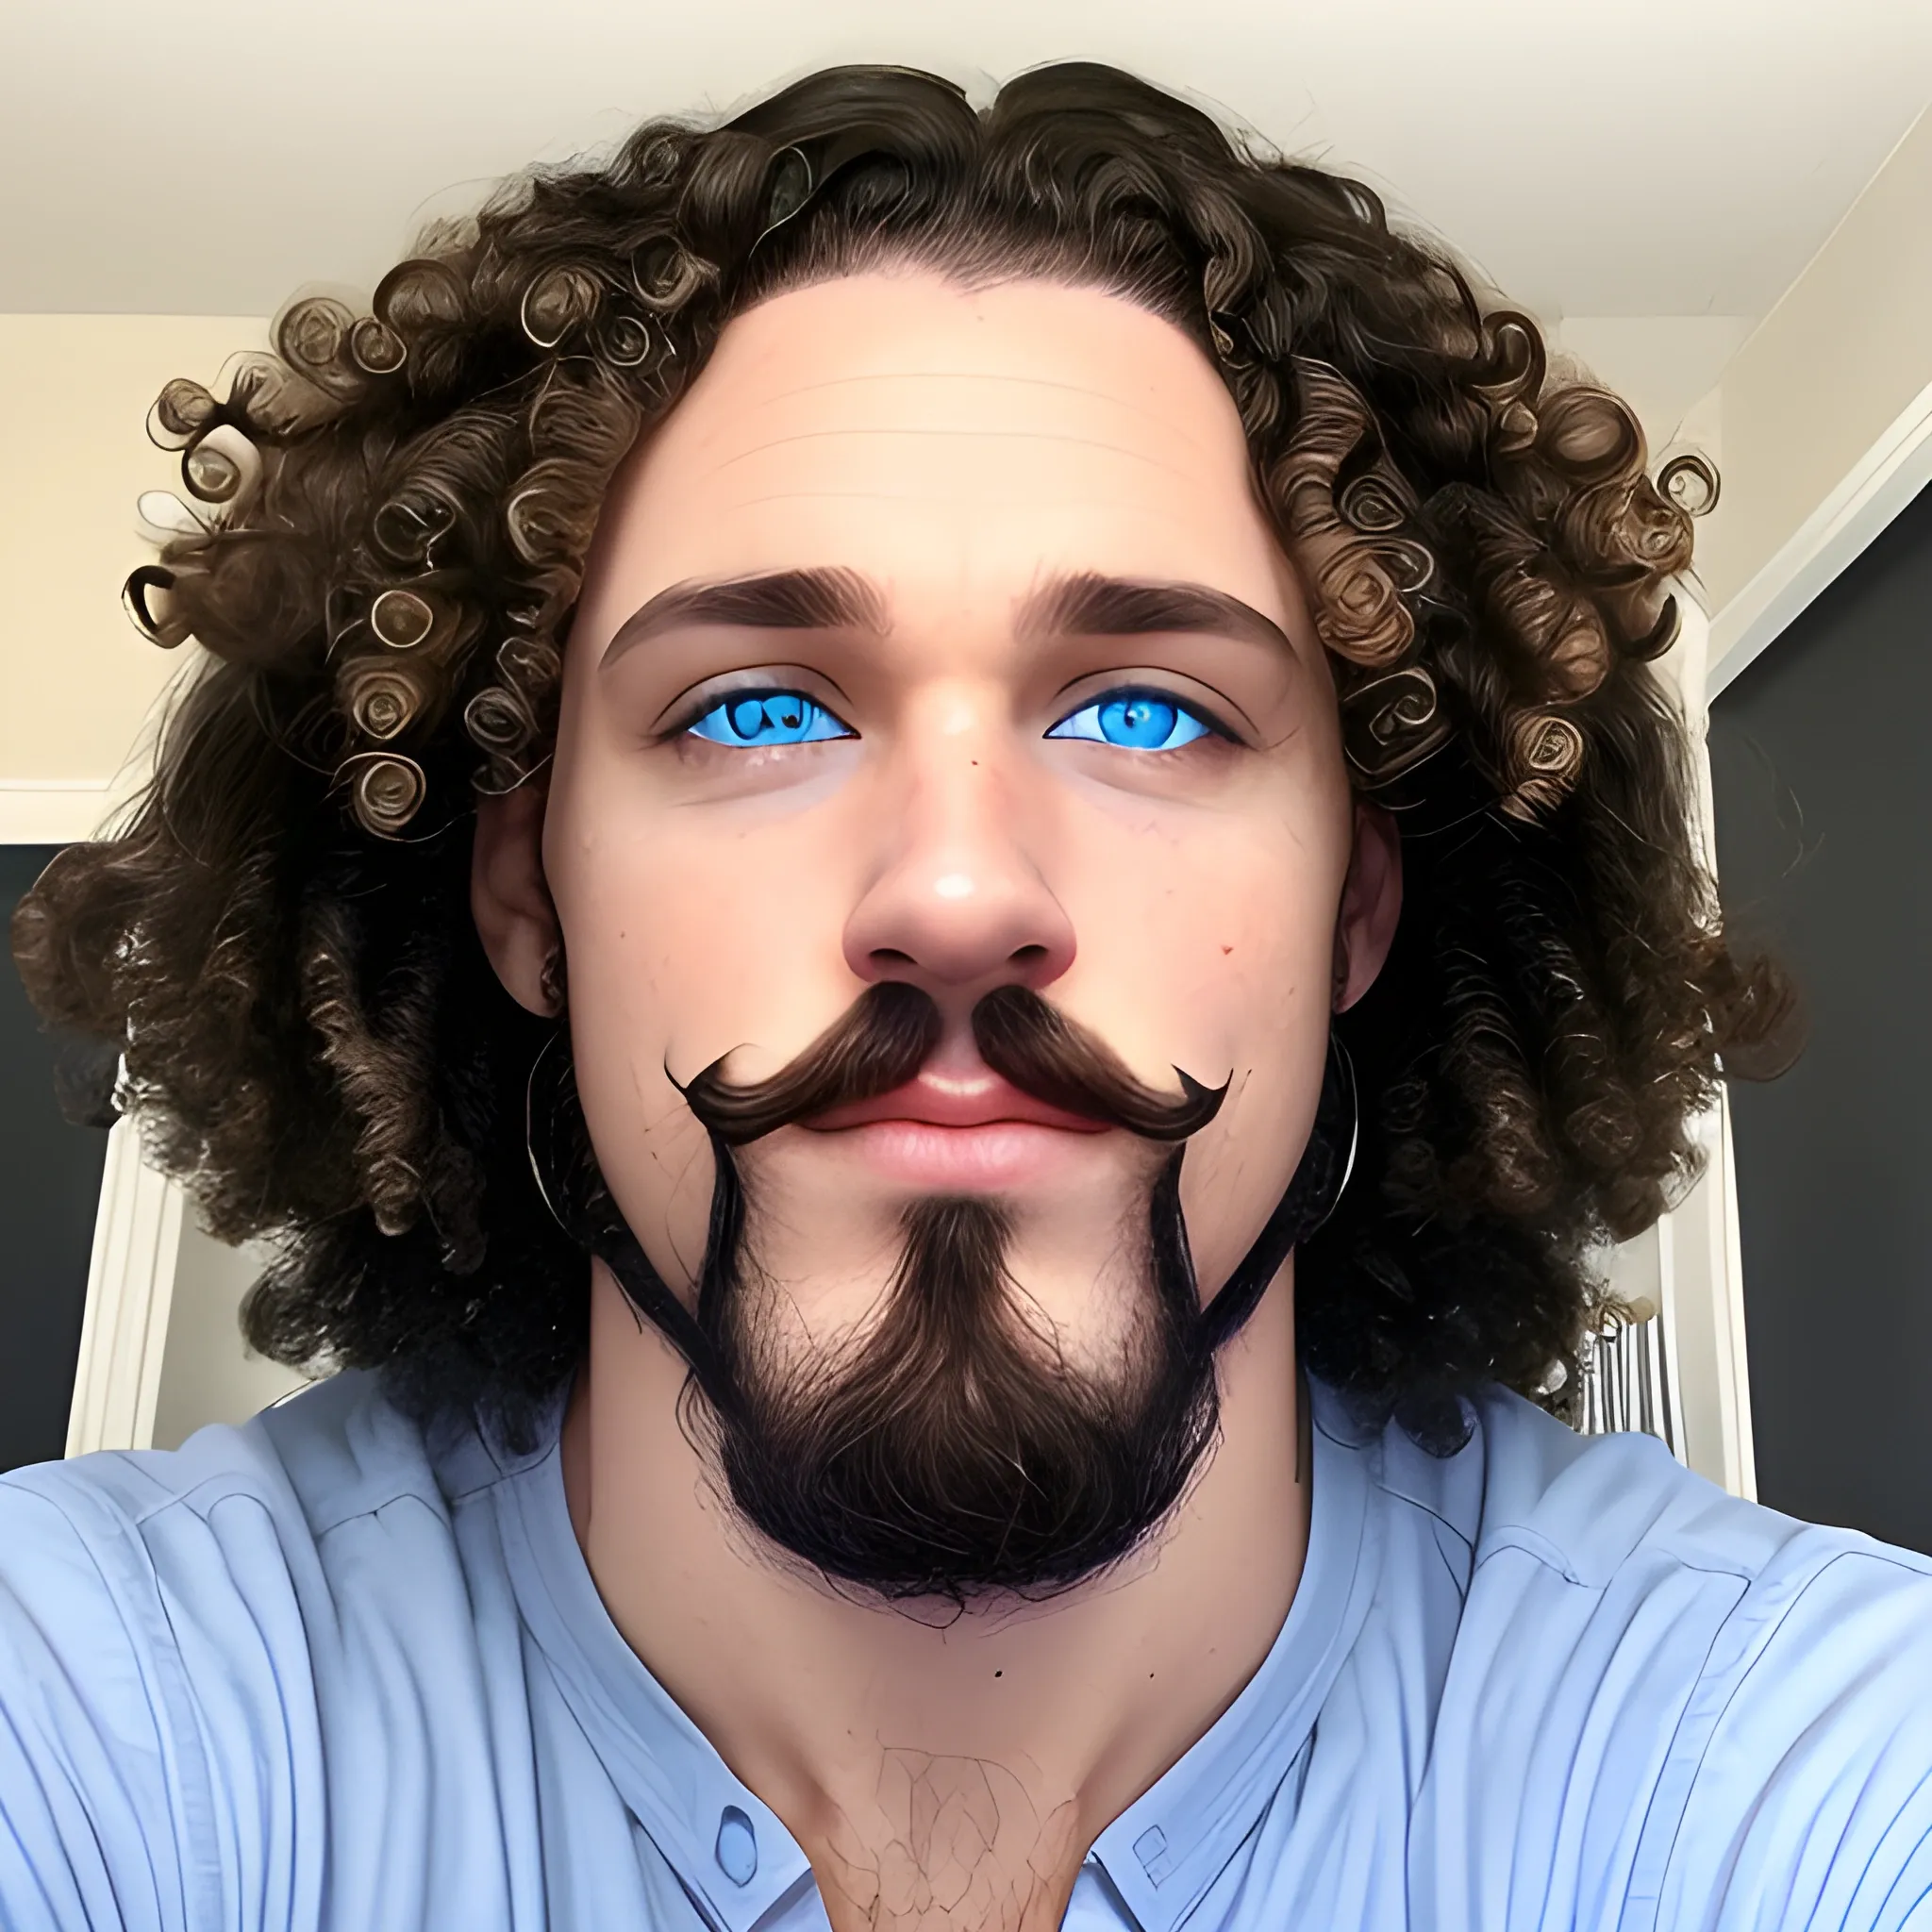 White man dark curly hair goatee blue eyes